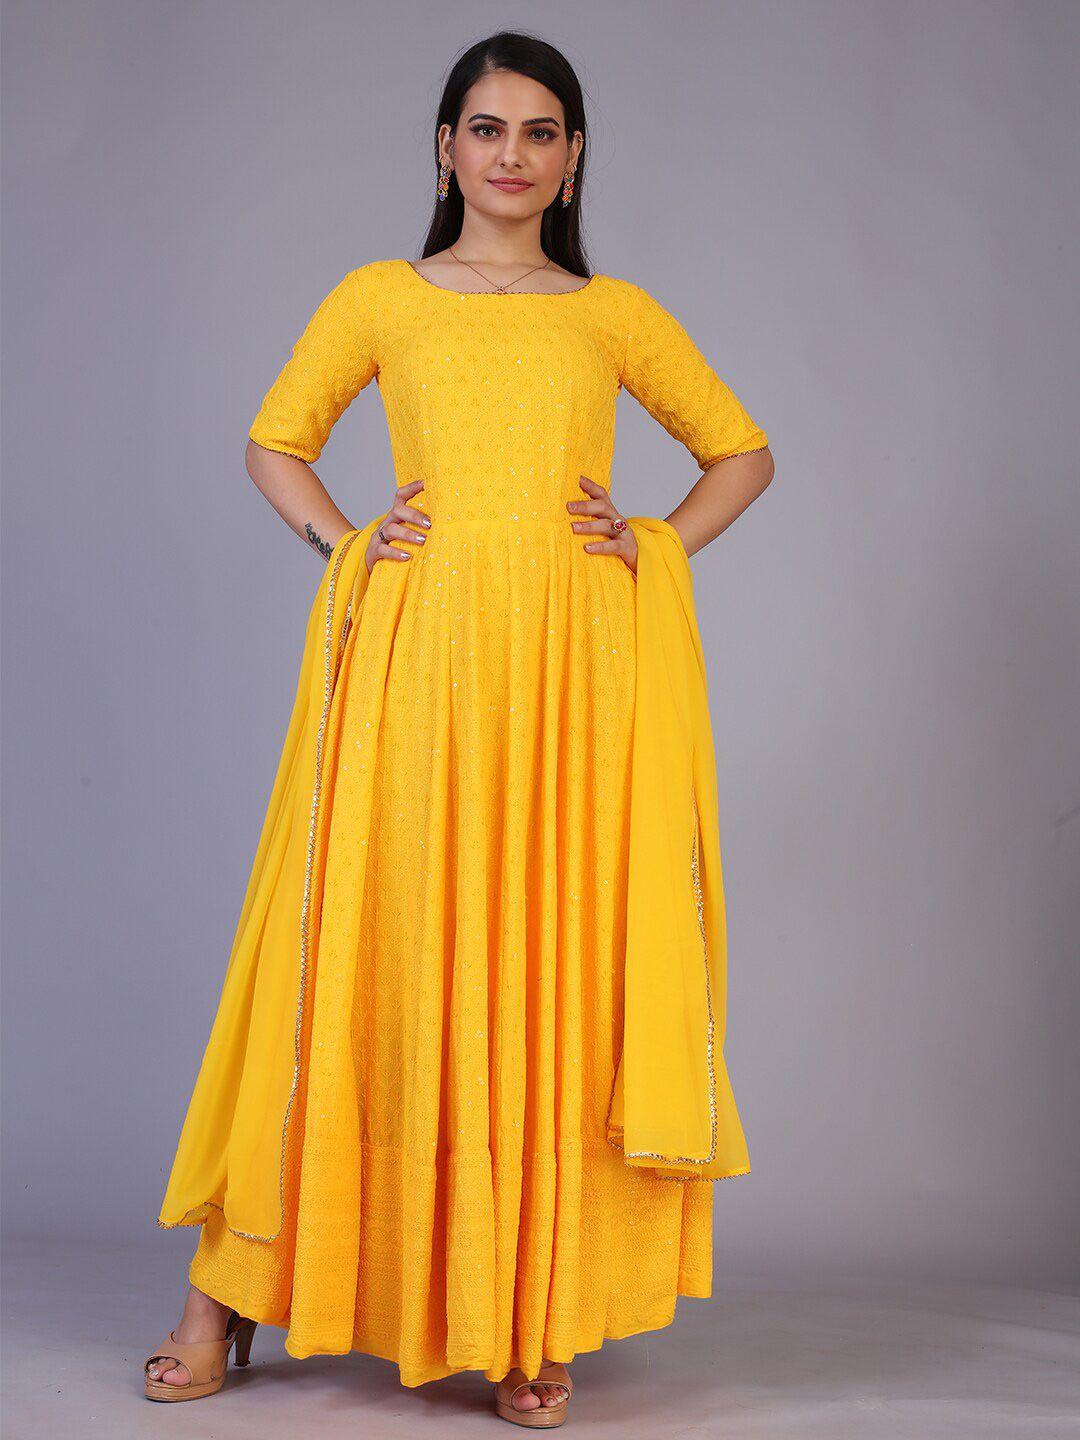 prenea yellow maxi dress